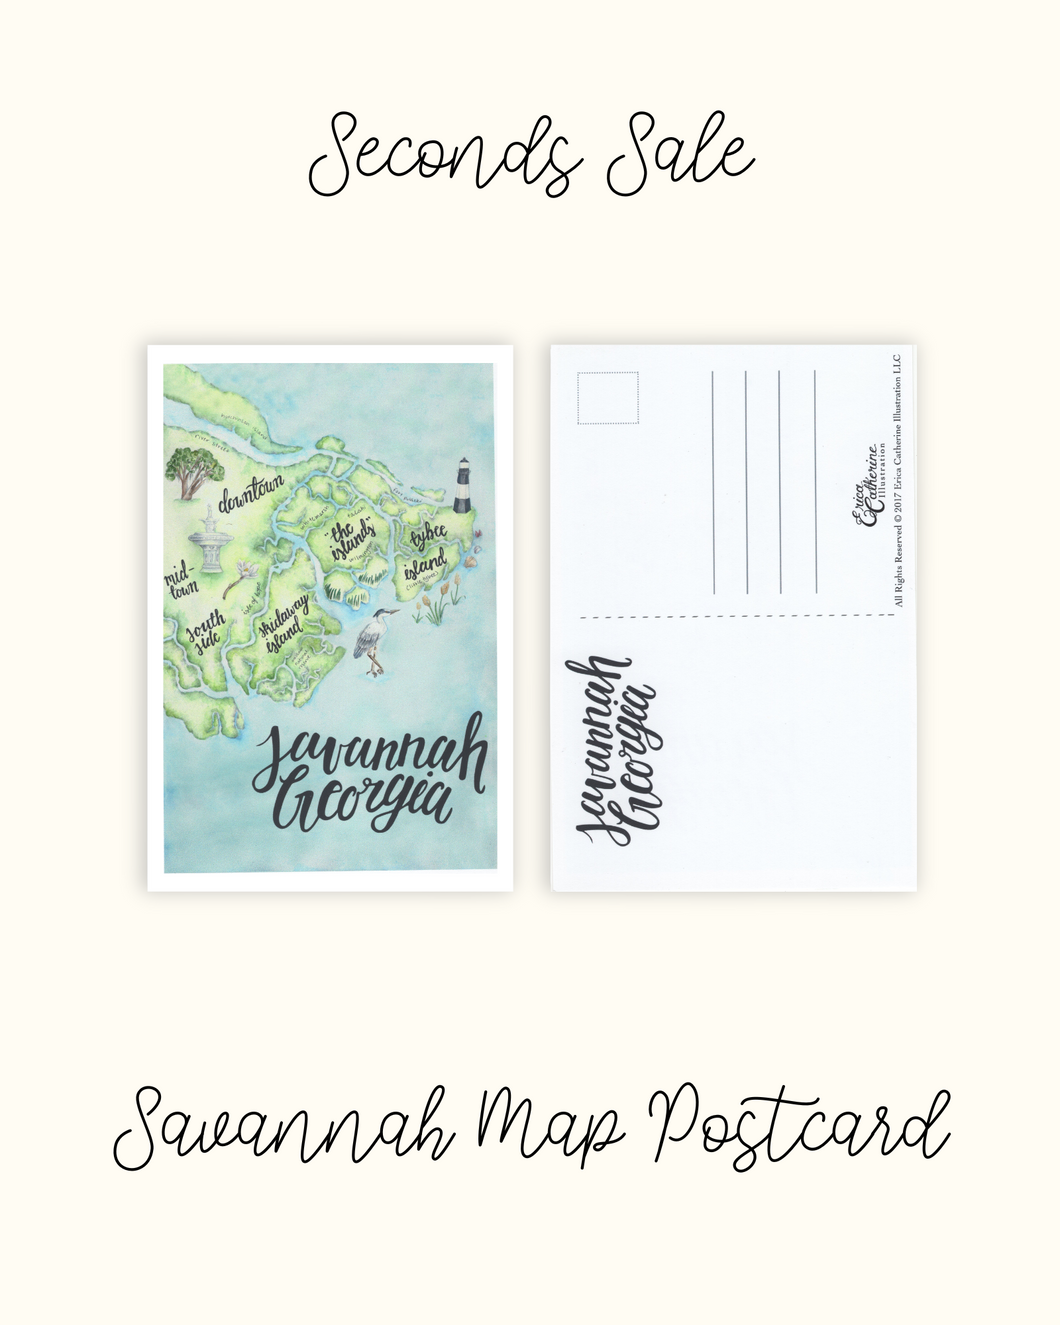 Savannah Georgia Map Postcard - Seconds Sale